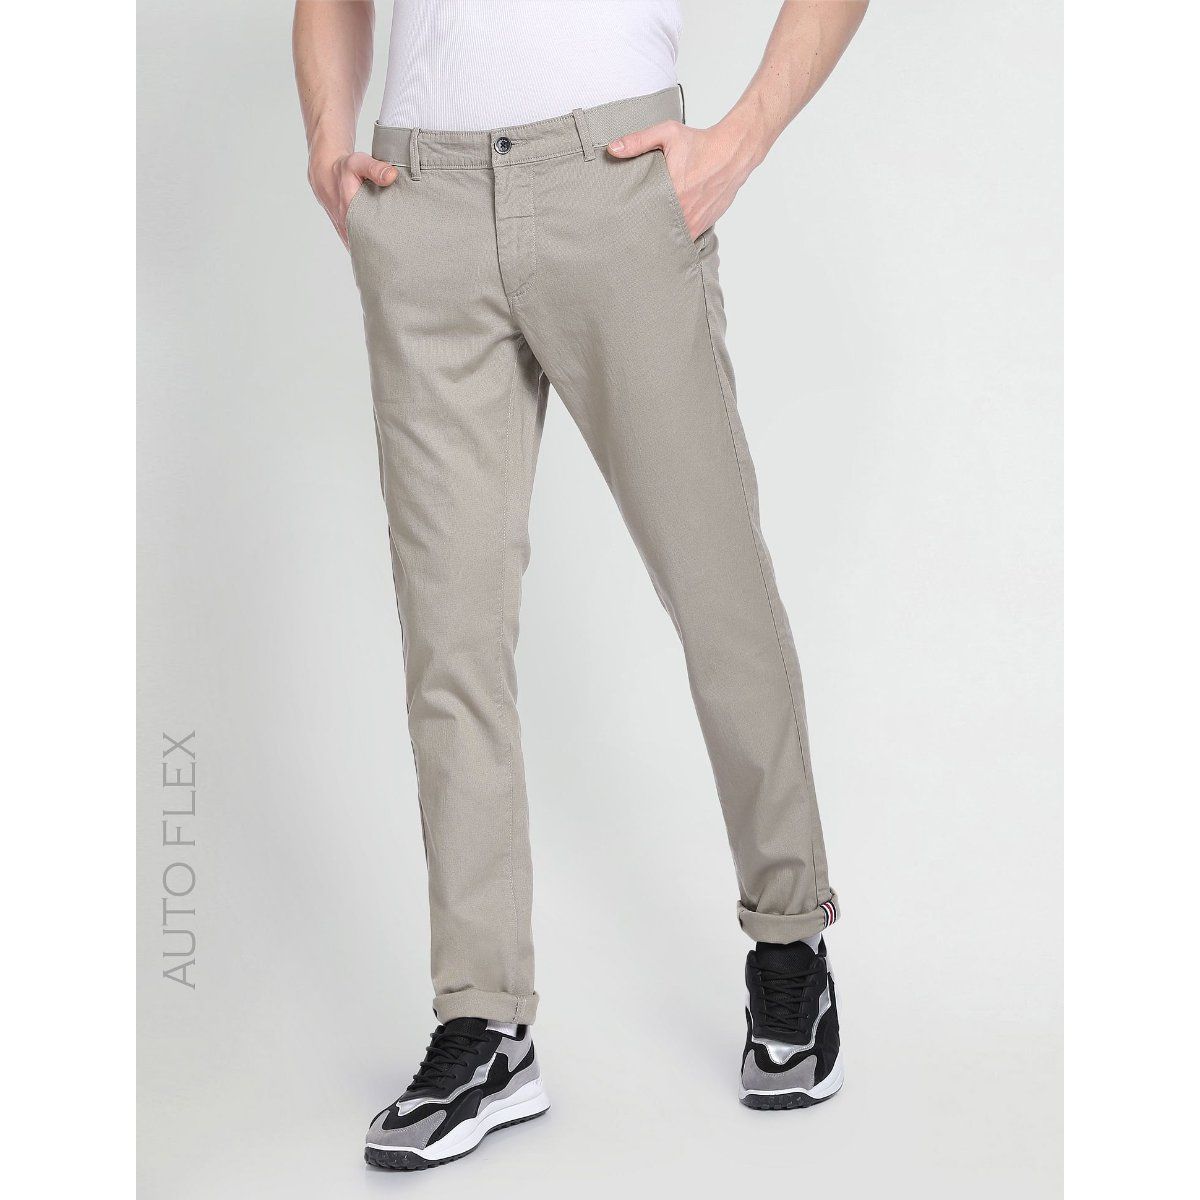 Arrow Formal Trousers  Buy Arrow Men Beige Tapered Fit Autoflex Waist  Solid Formal Trousers Online  Nykaa Fashion